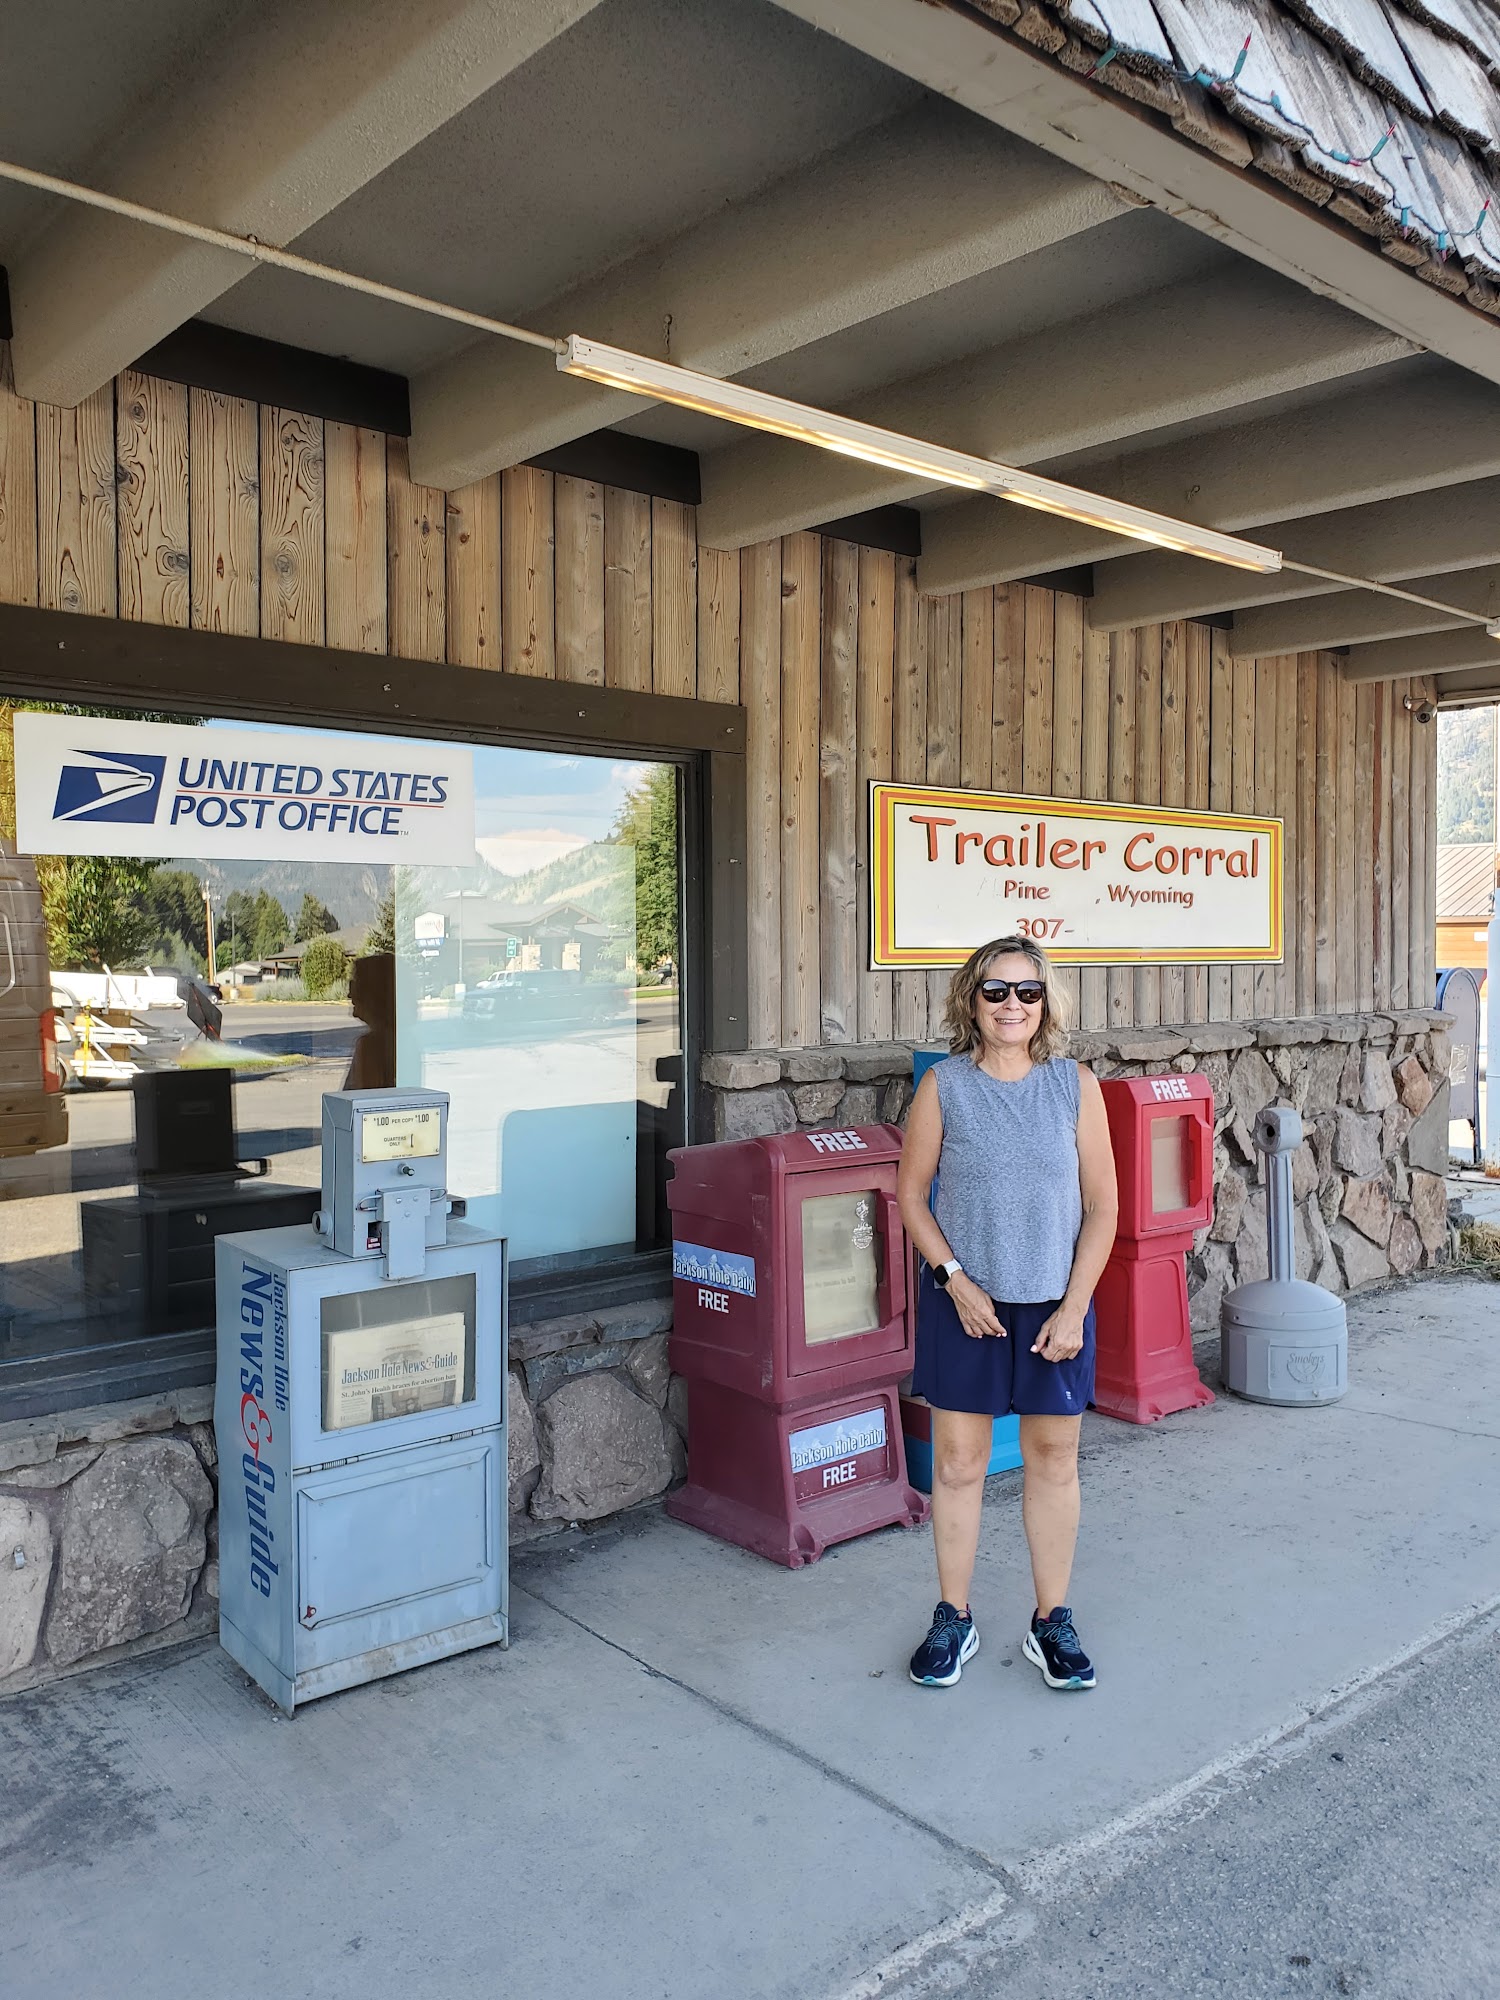 Alpine Post Office